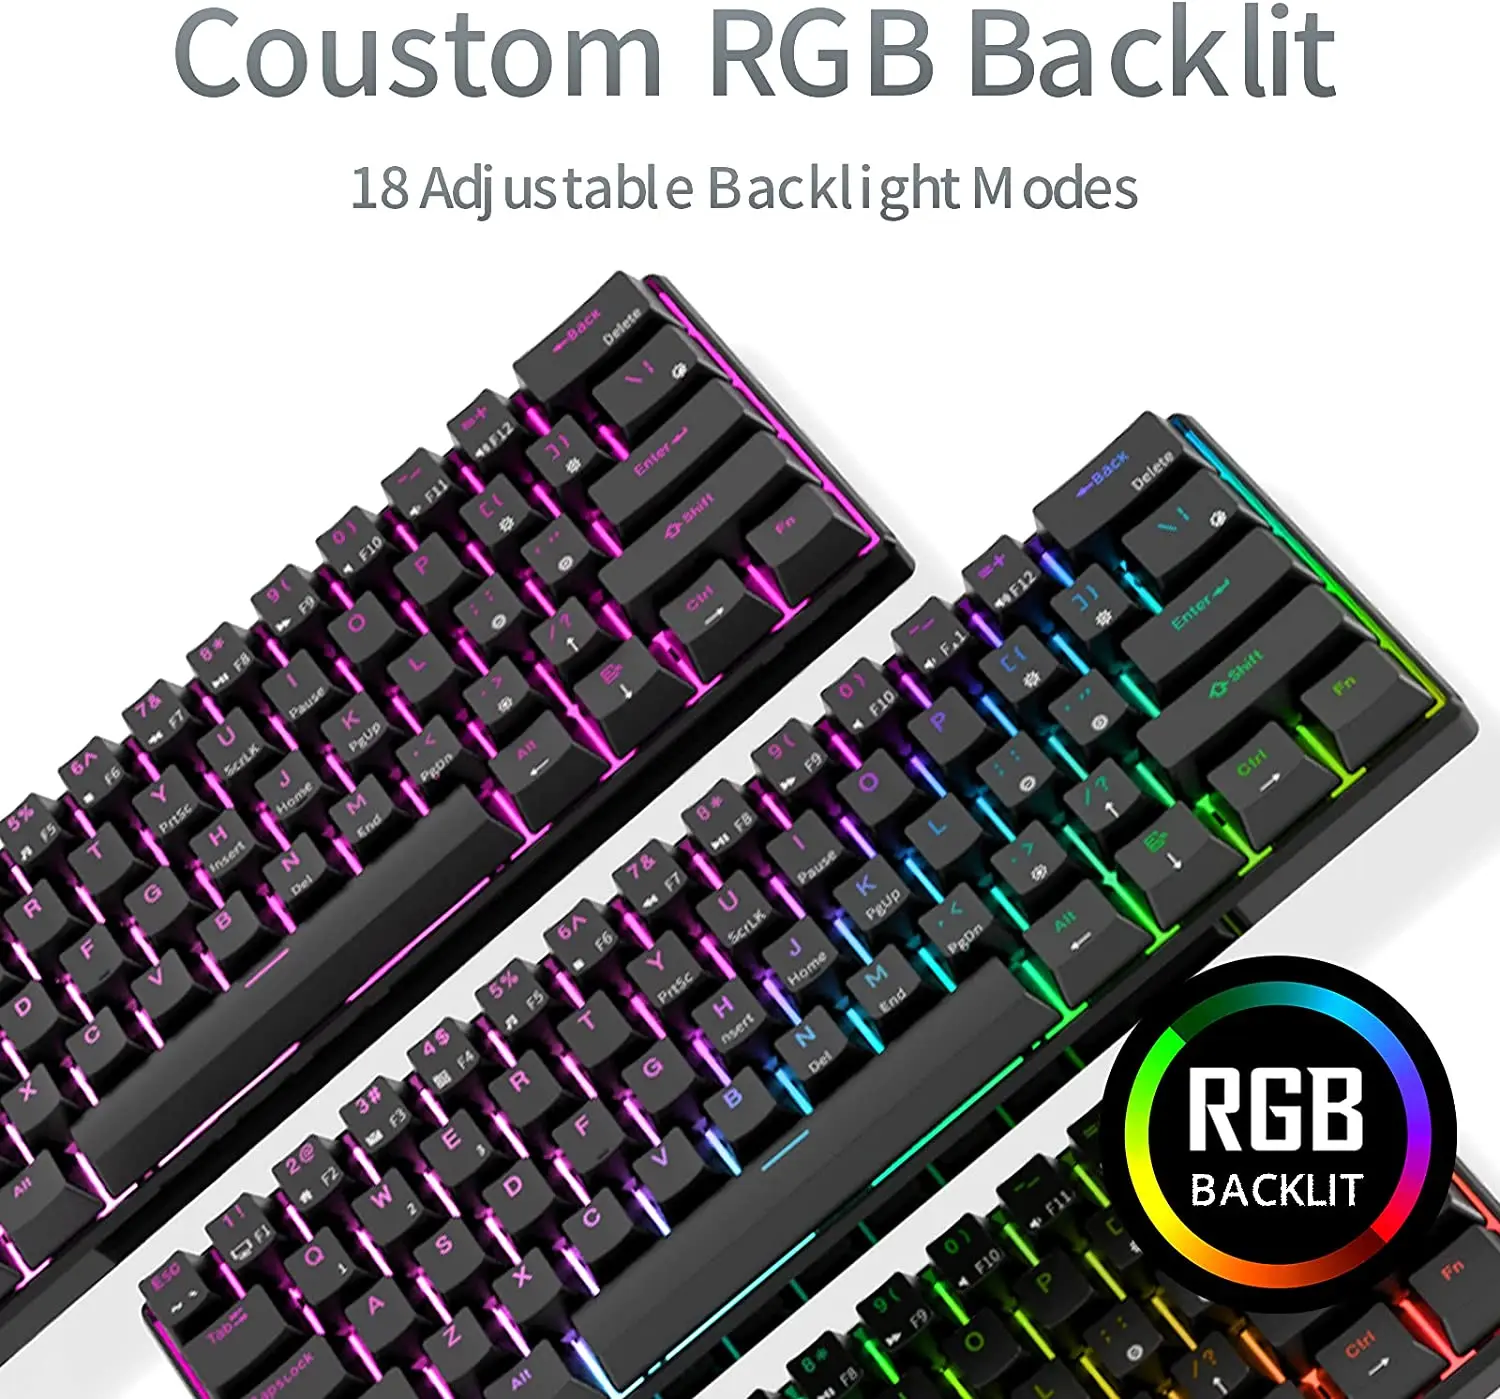 RK61 Royal Kludge Wireless Mechanical Keyboard Tri-Mode Bluetooth 5.0/2.4G/USB-C RGB Backlit 61 Key Hot-Swappable Gamer Keyboard enlarge